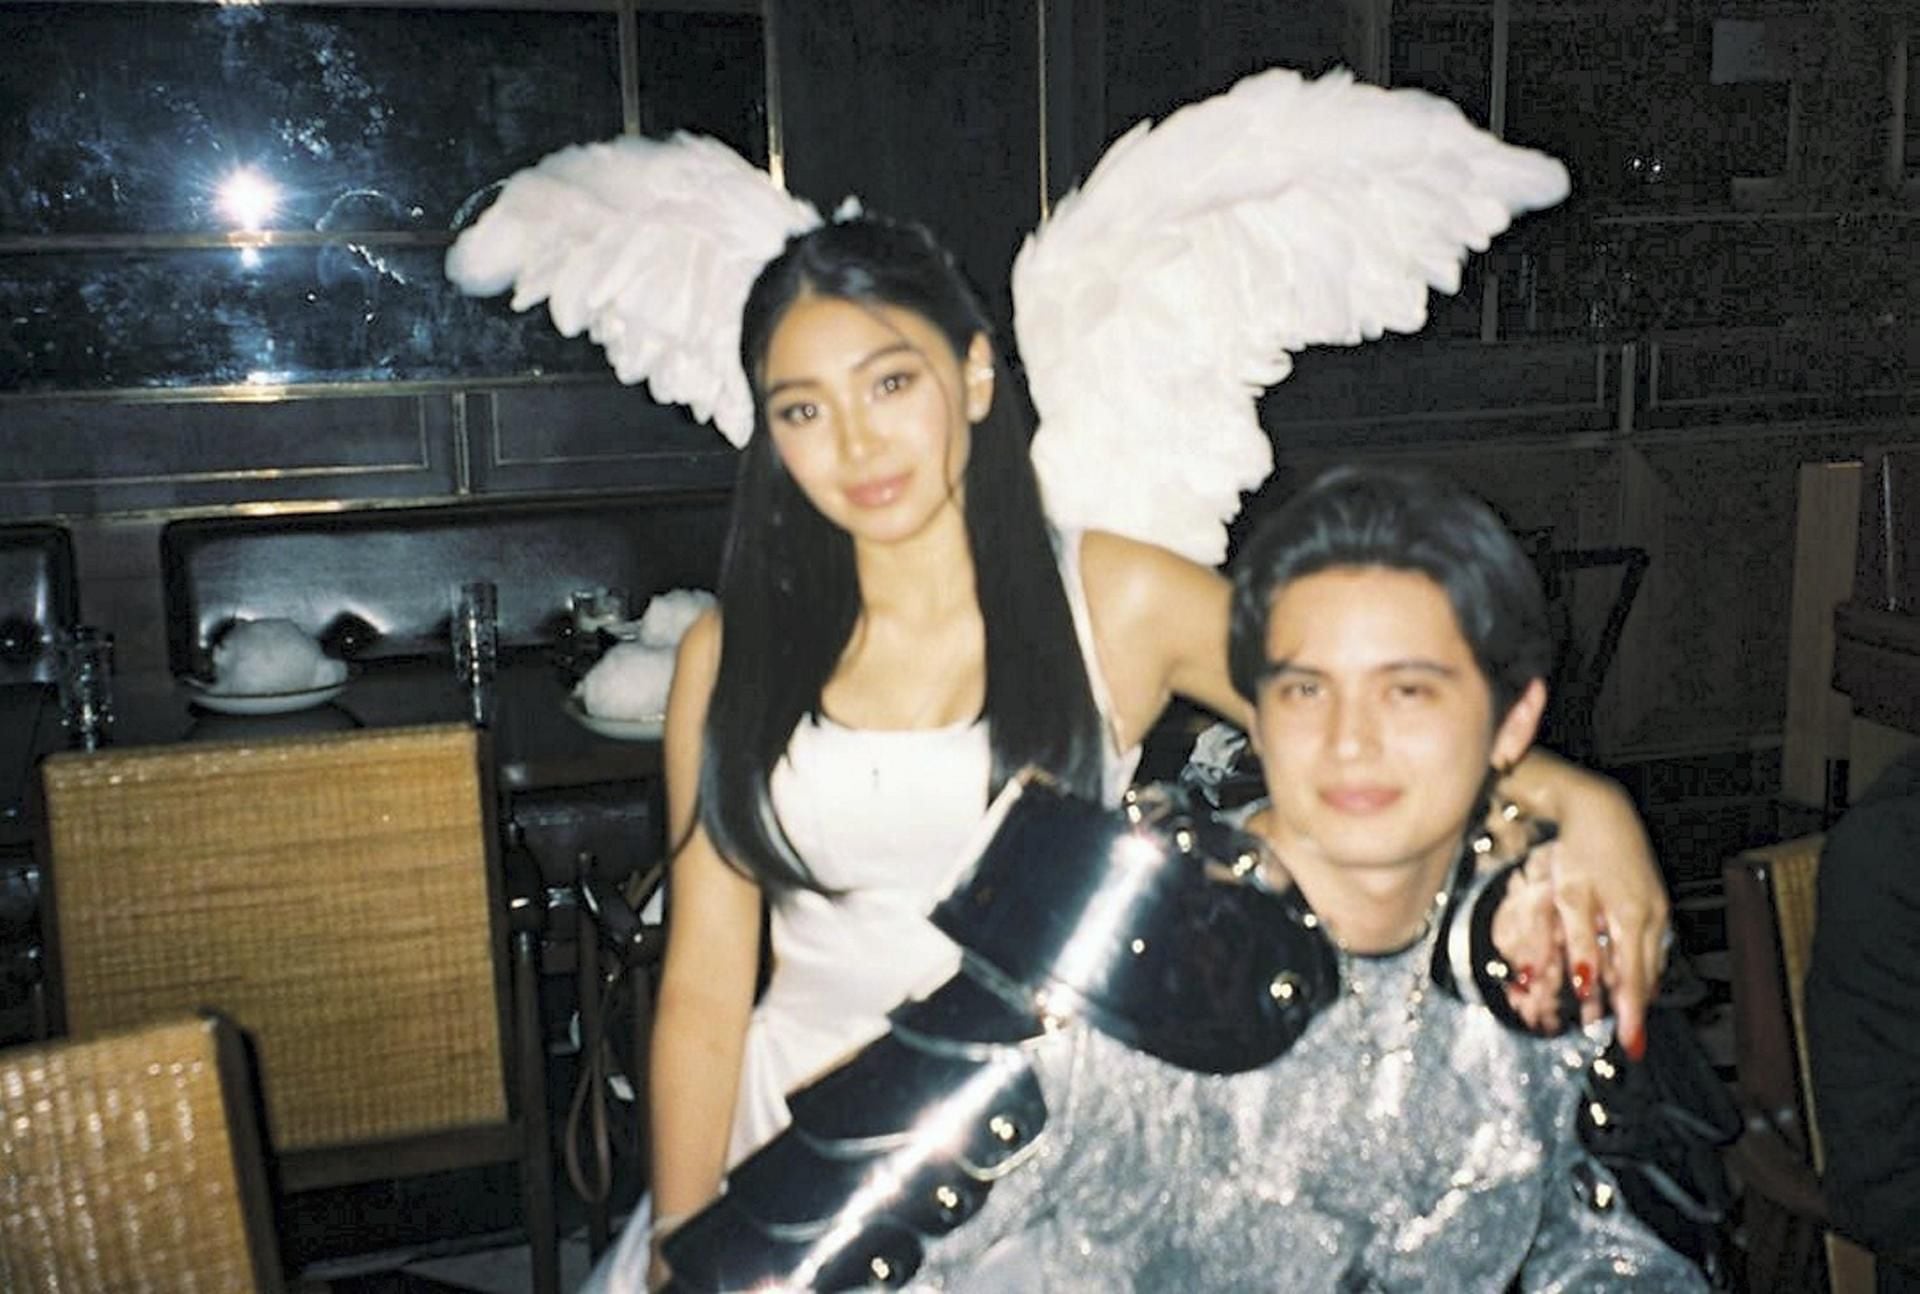 Filipino love team James Reid and Nadine Lustre confirm break-up